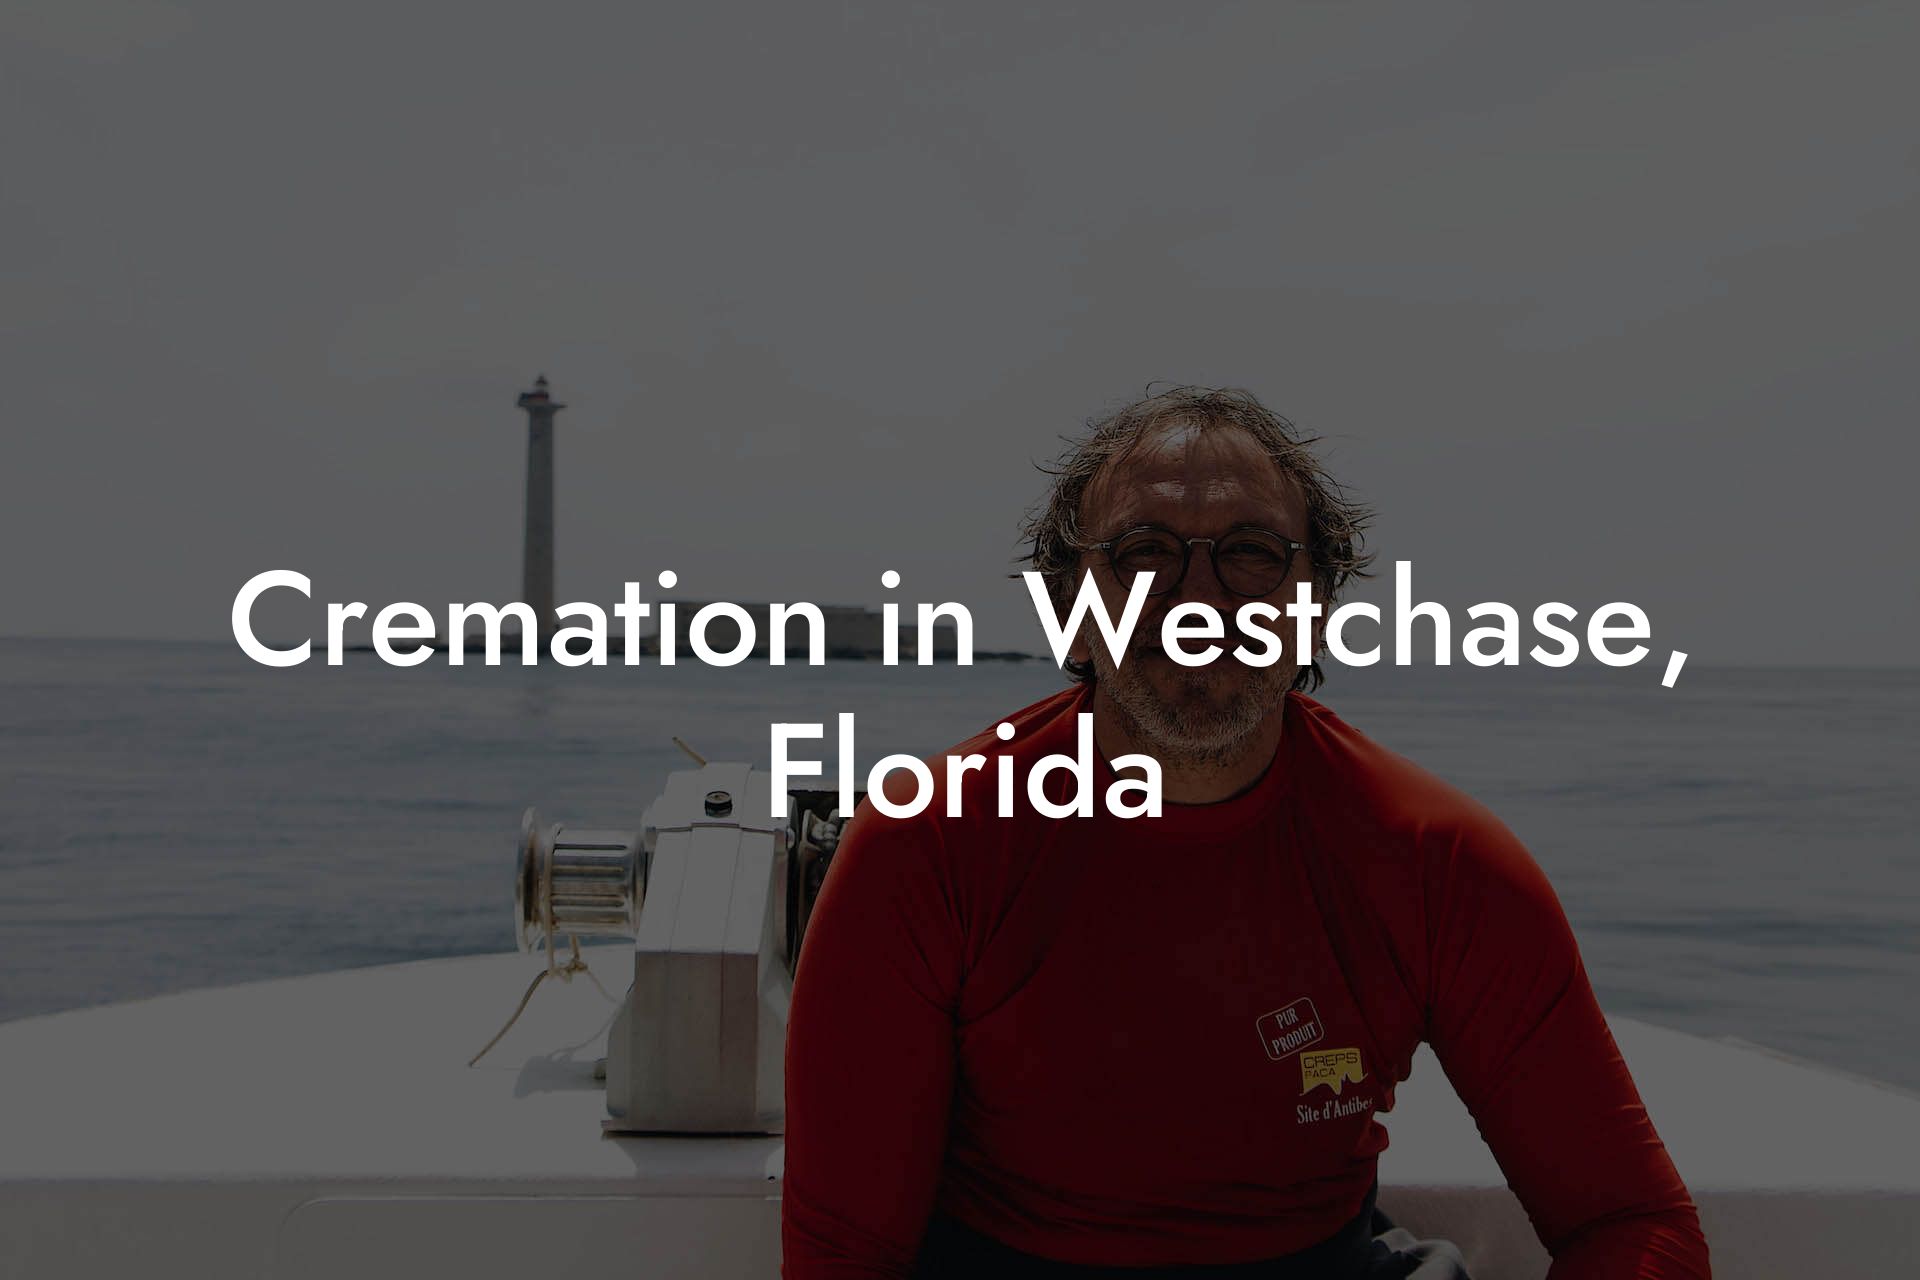 Cremation in Westchase, Florida